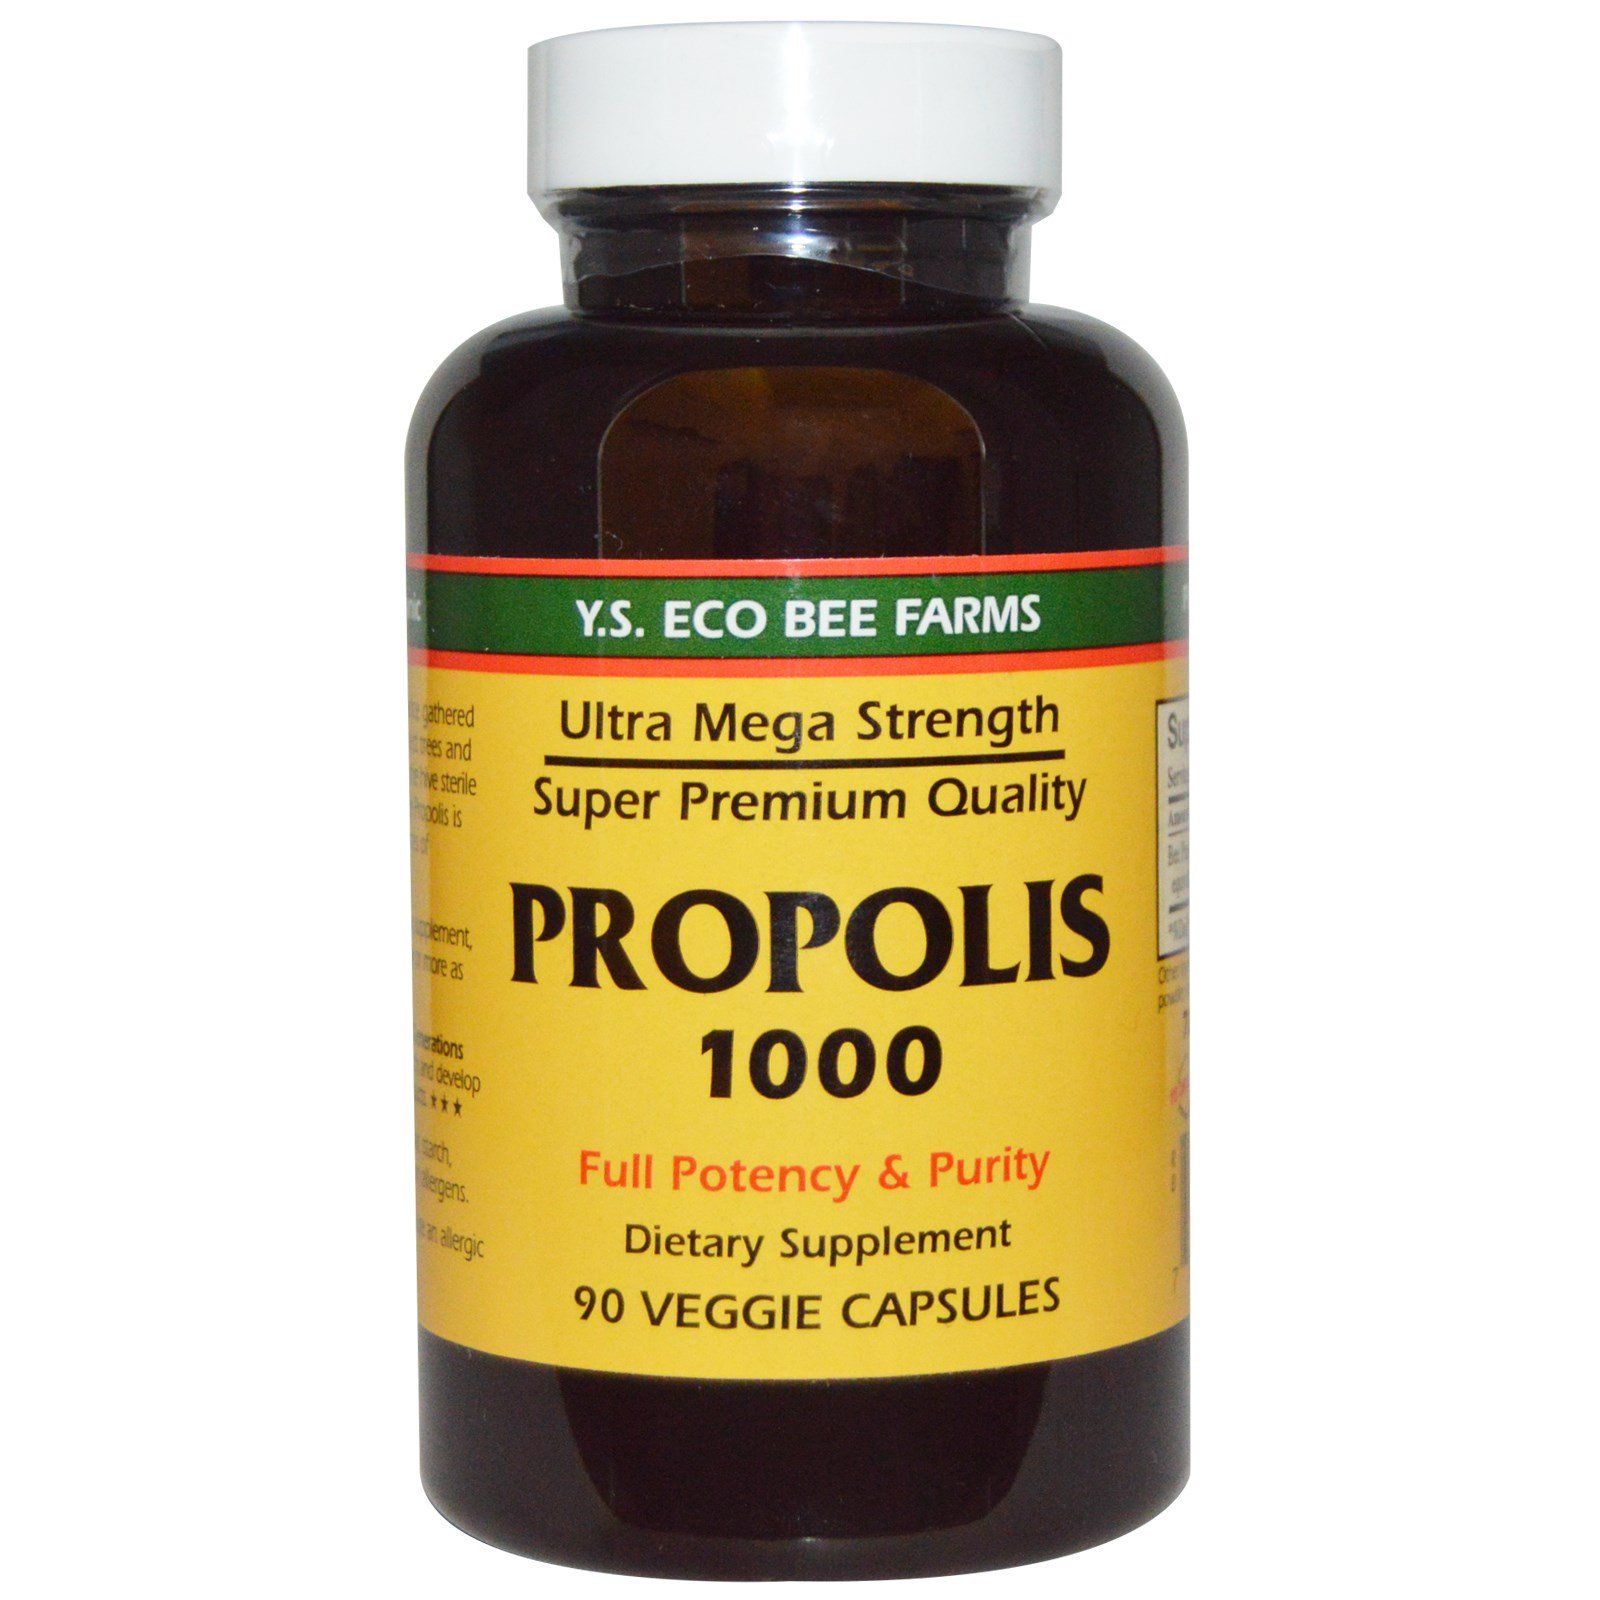 Y.S. Eco Bee Farms Прополис 1000 500 mg 90 овощных капсул